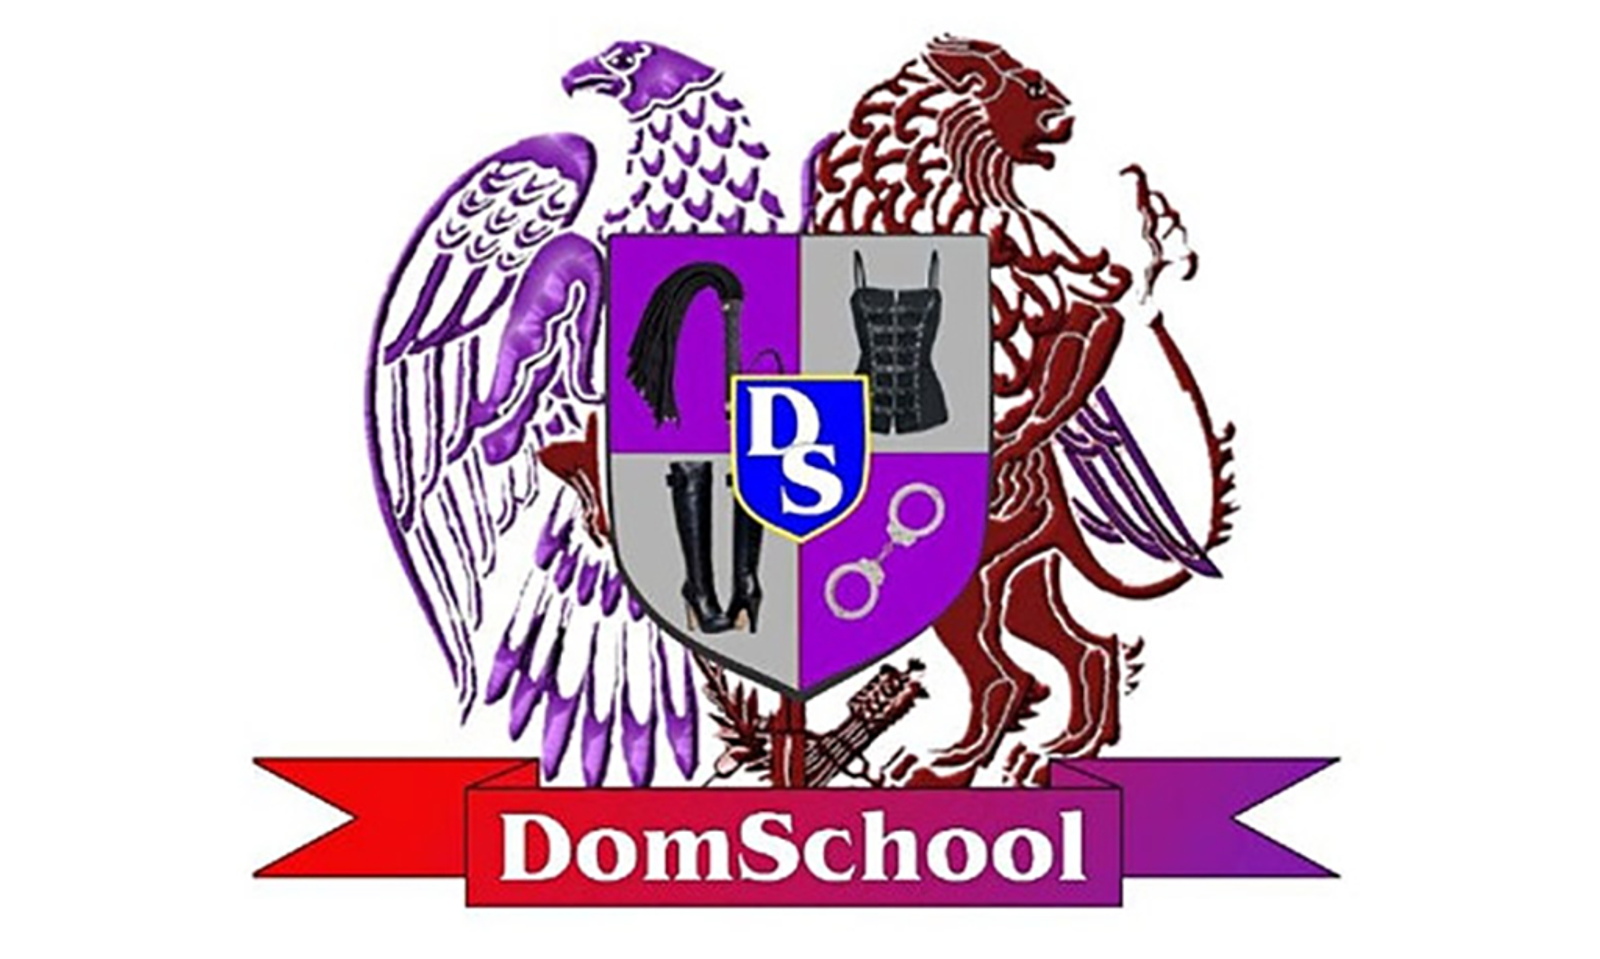 Mistress Cyan, Goddess Phoenix Offer Dom Education At DomSchool